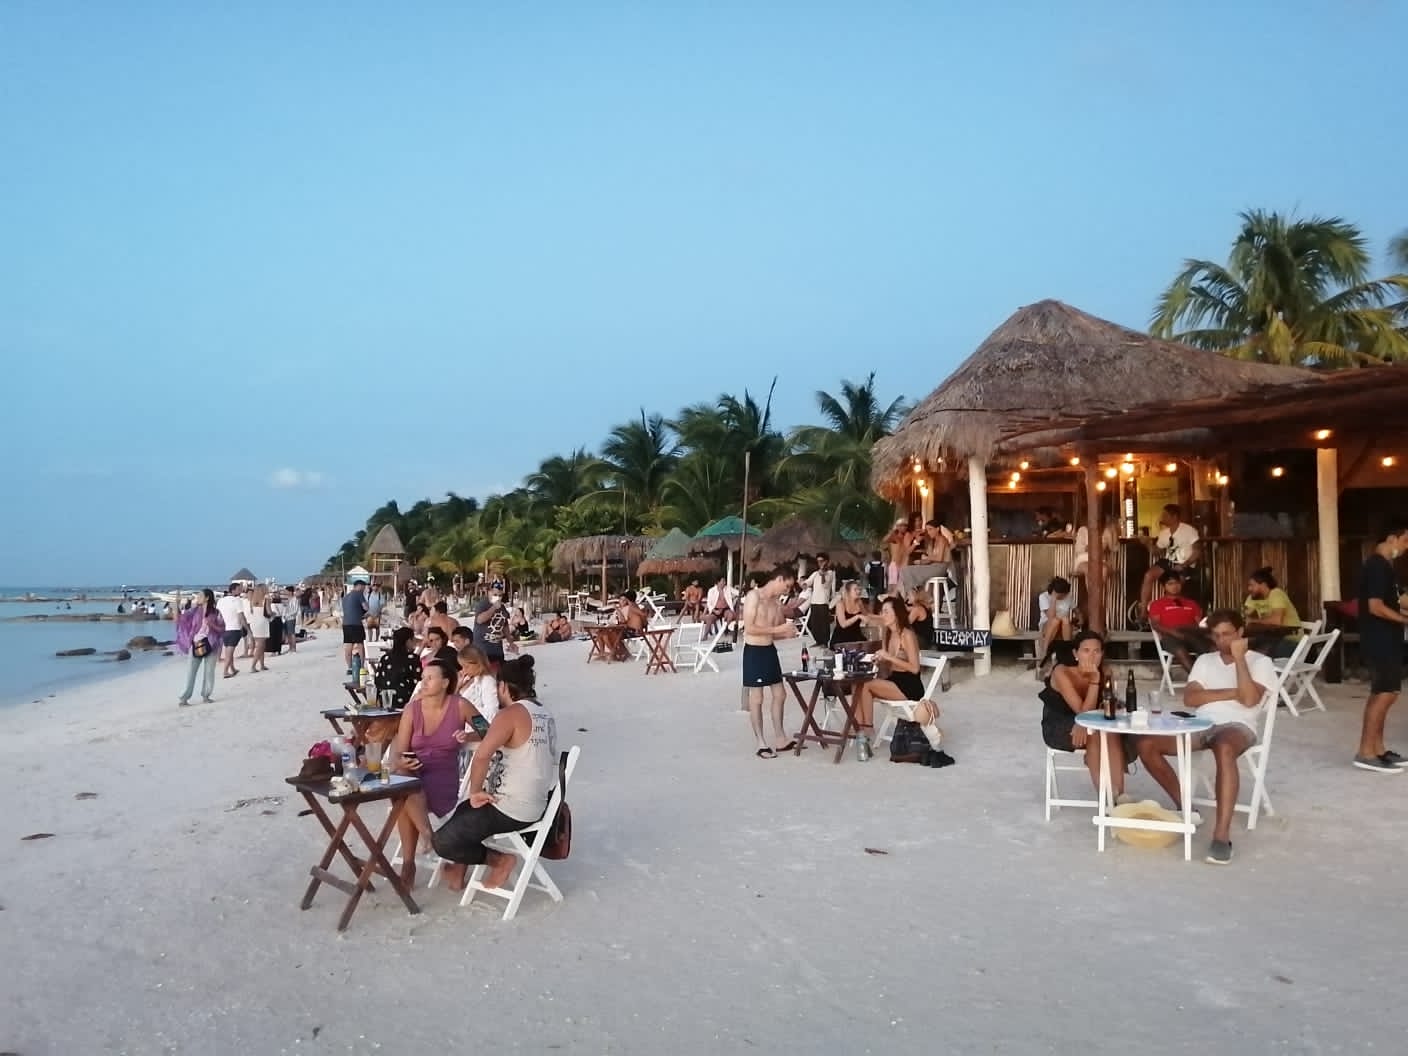 Restaurantes en Holbox, playas del Caribe